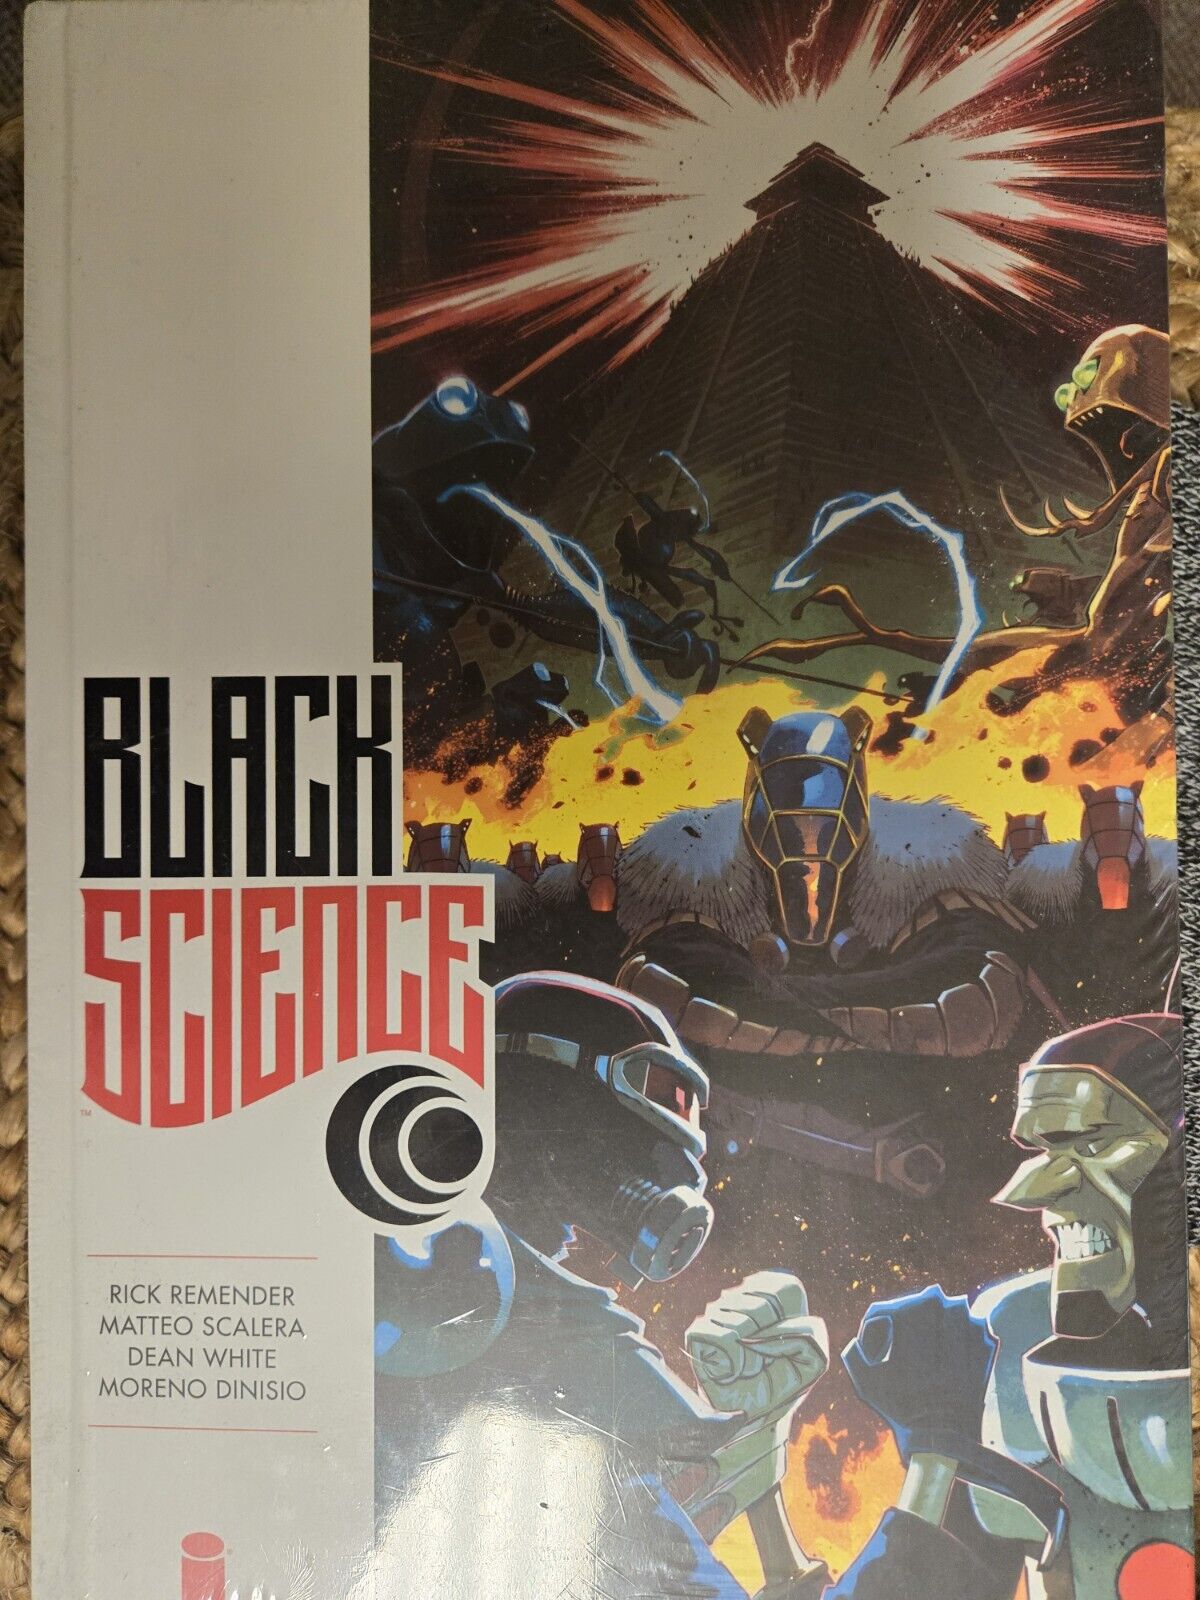 Black Science Hardcover Vol 1 (Rick Remender) Image Comics, Great Shape